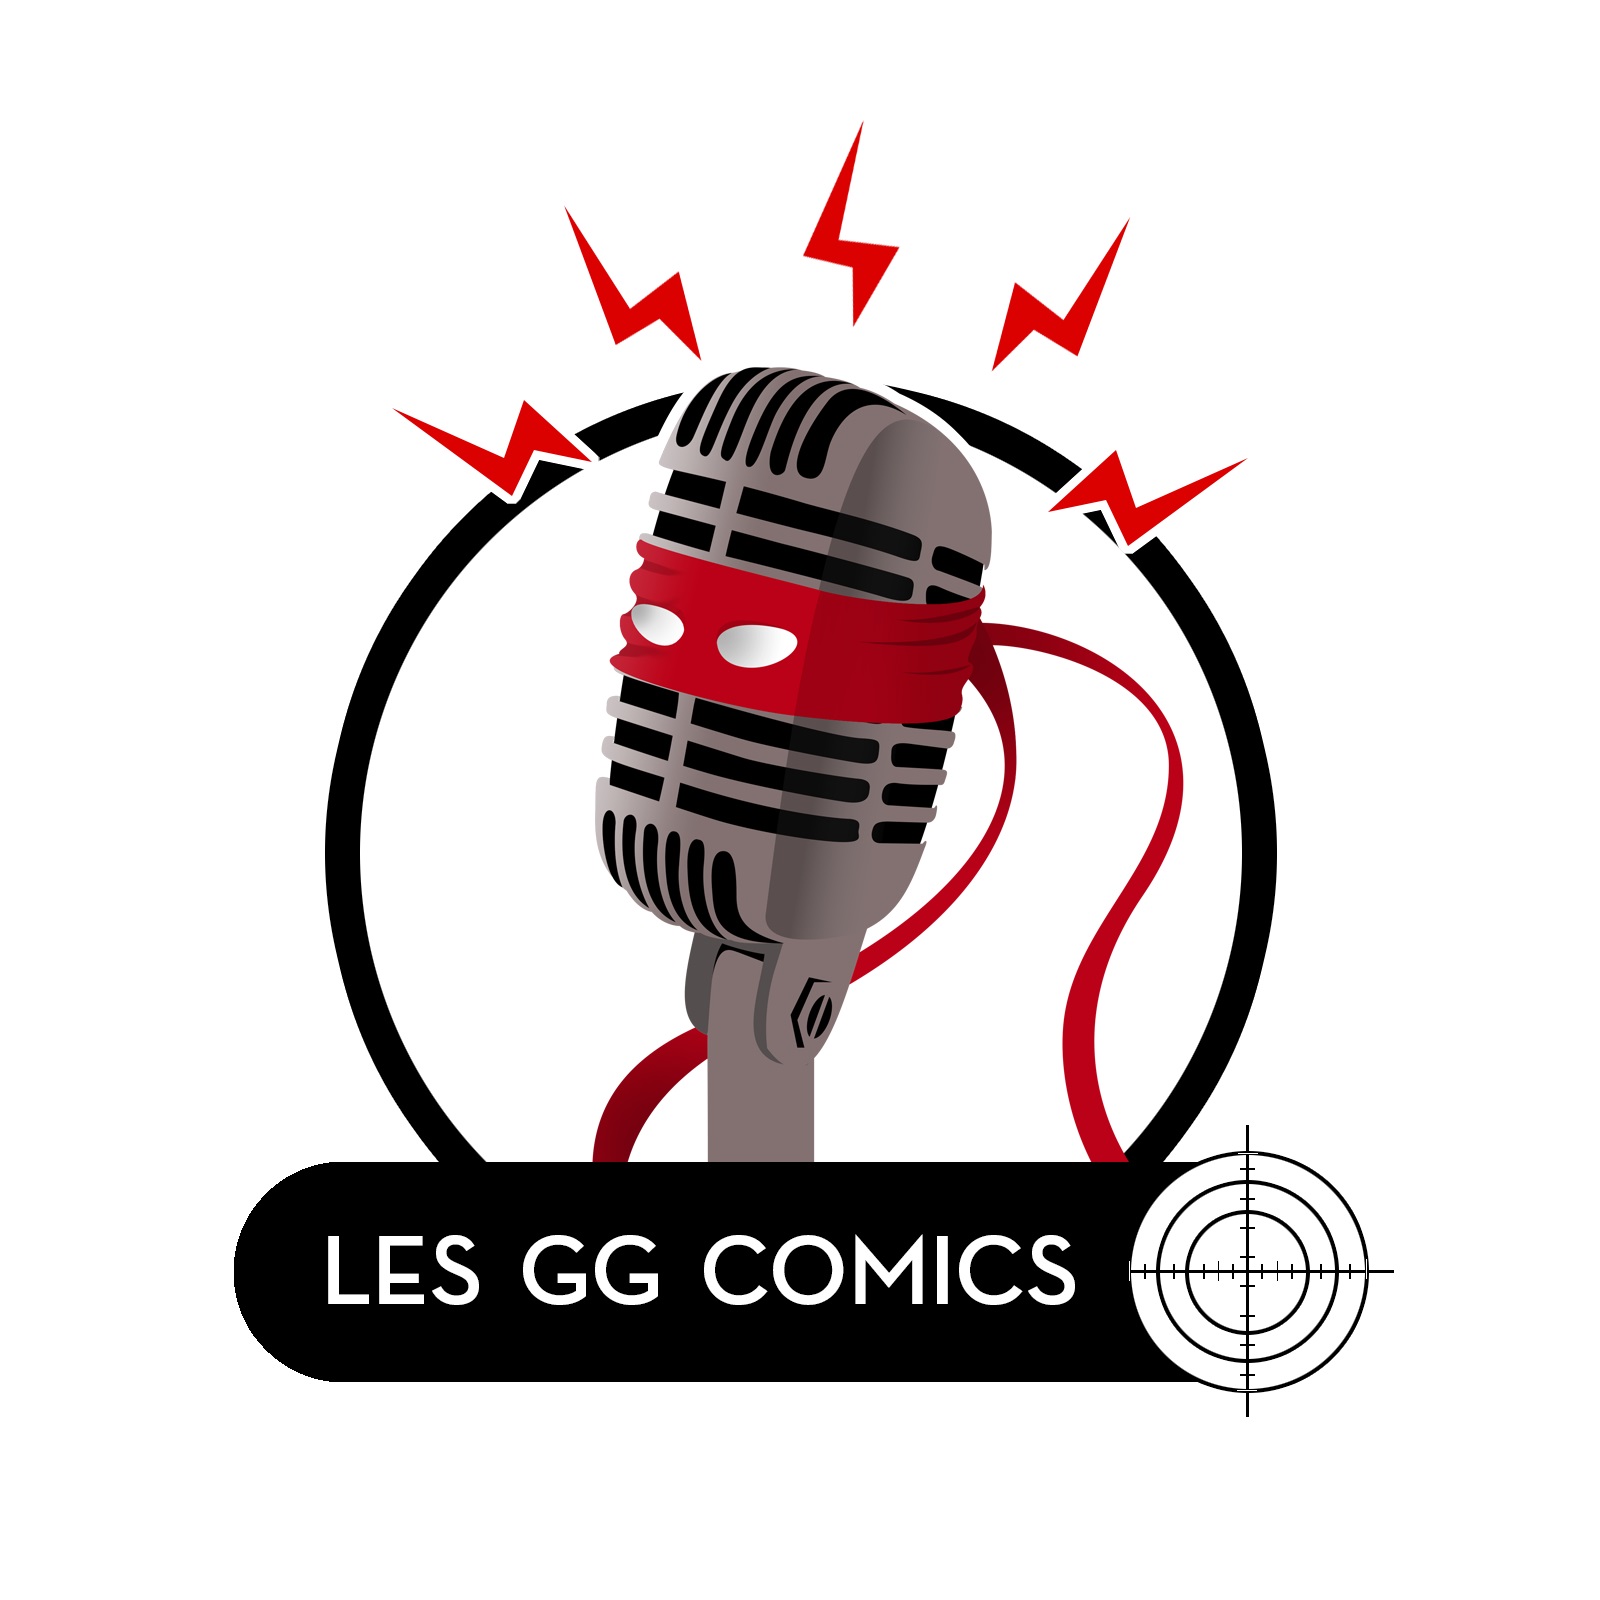 Les GG comics #64 : Le vieux gars Logan